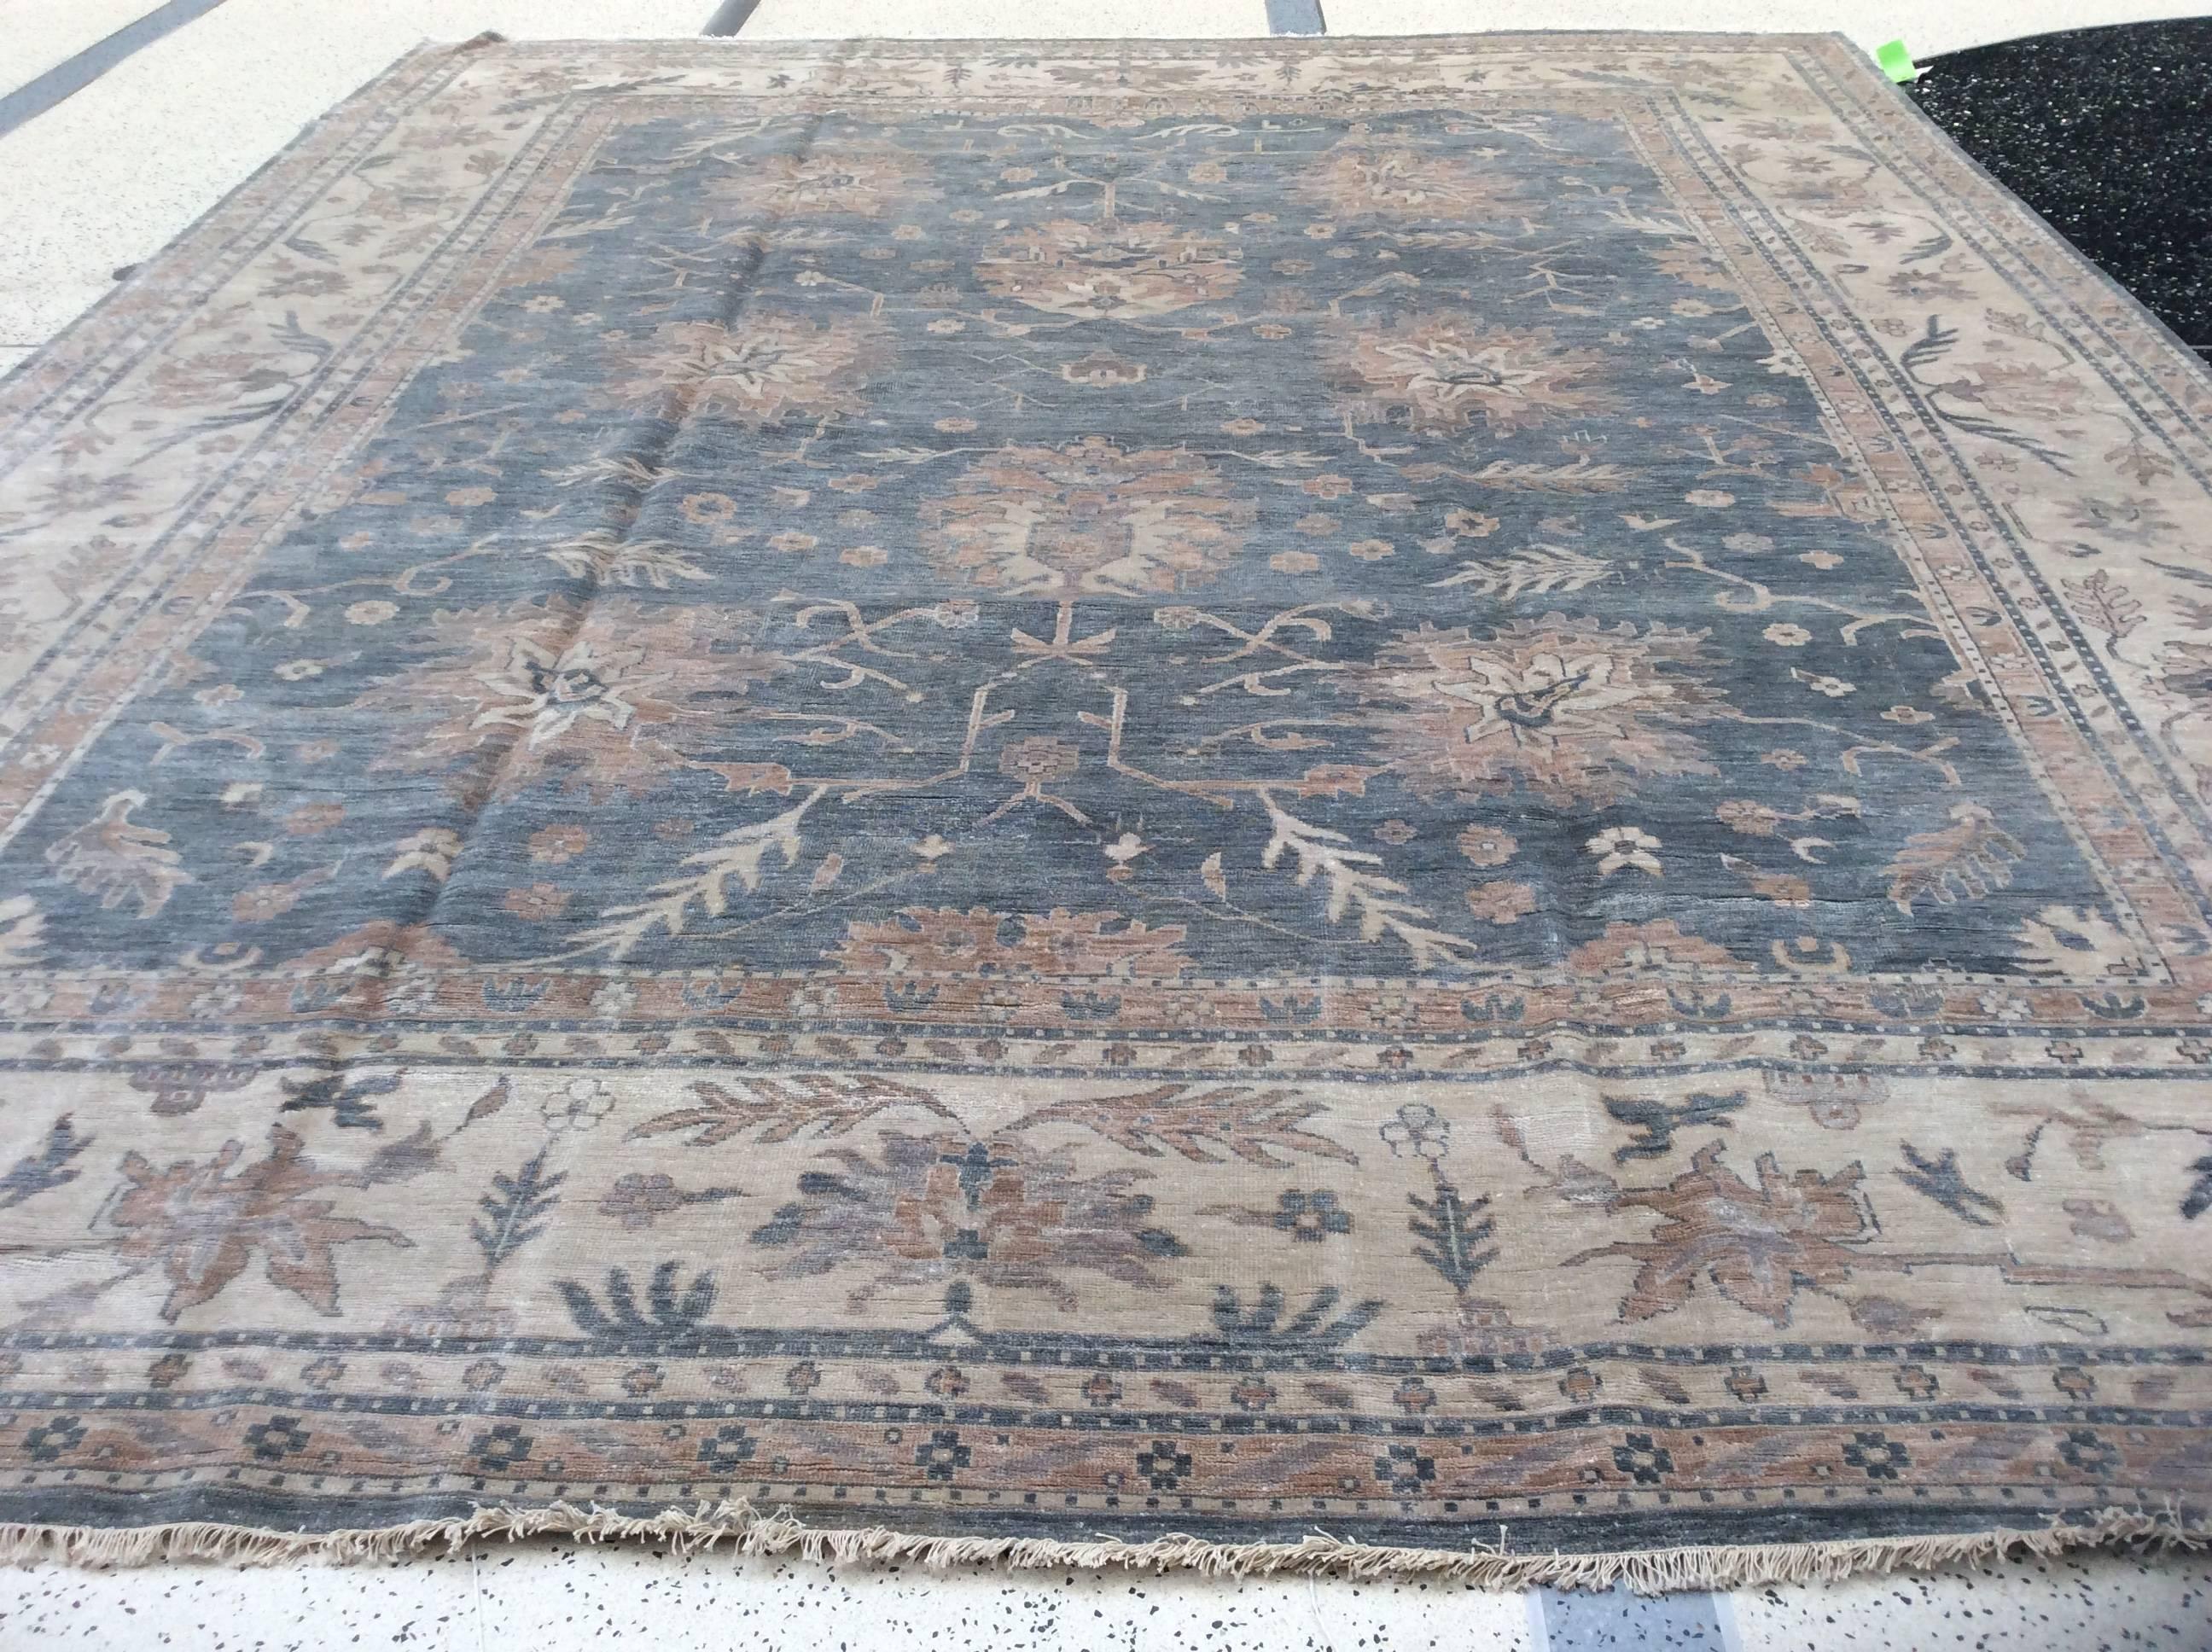 Semi-Antique Mahal rug

Measurement:12' x 14'.